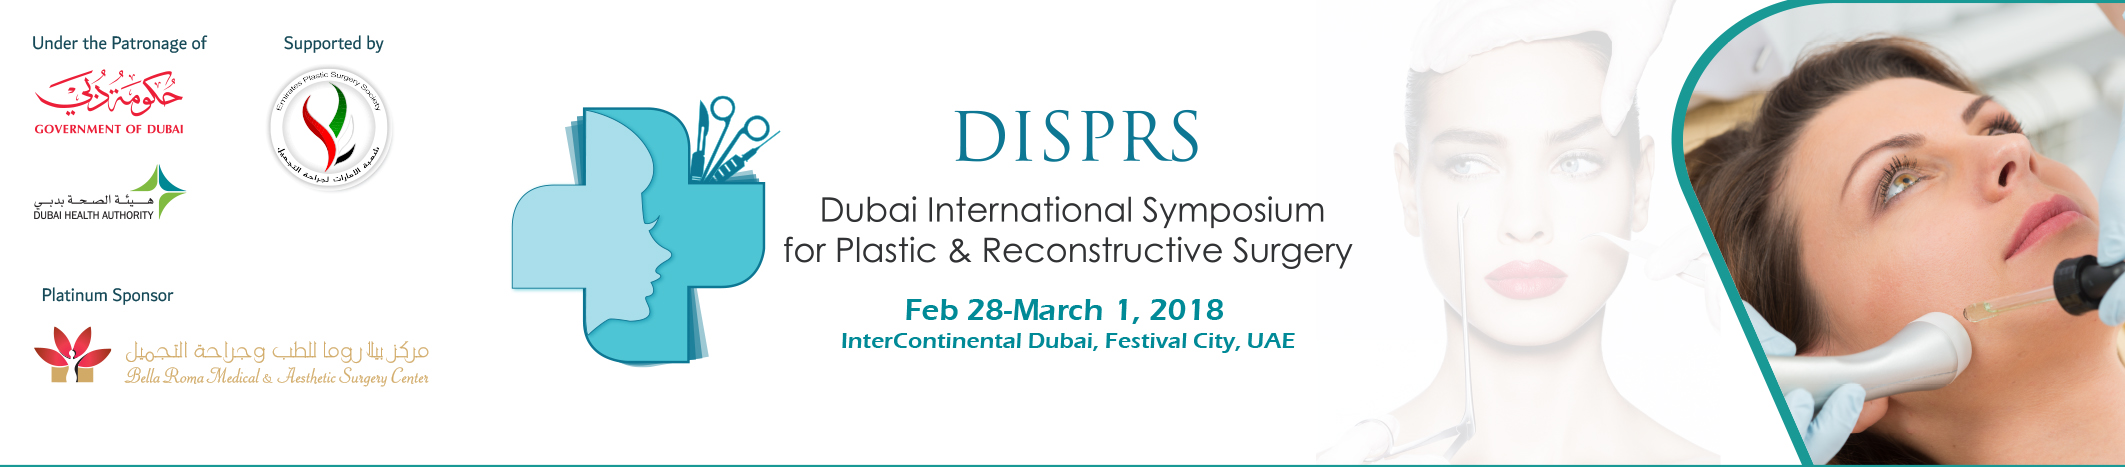 Dubai International Symposium for Plastic and Reconstructive Surgery